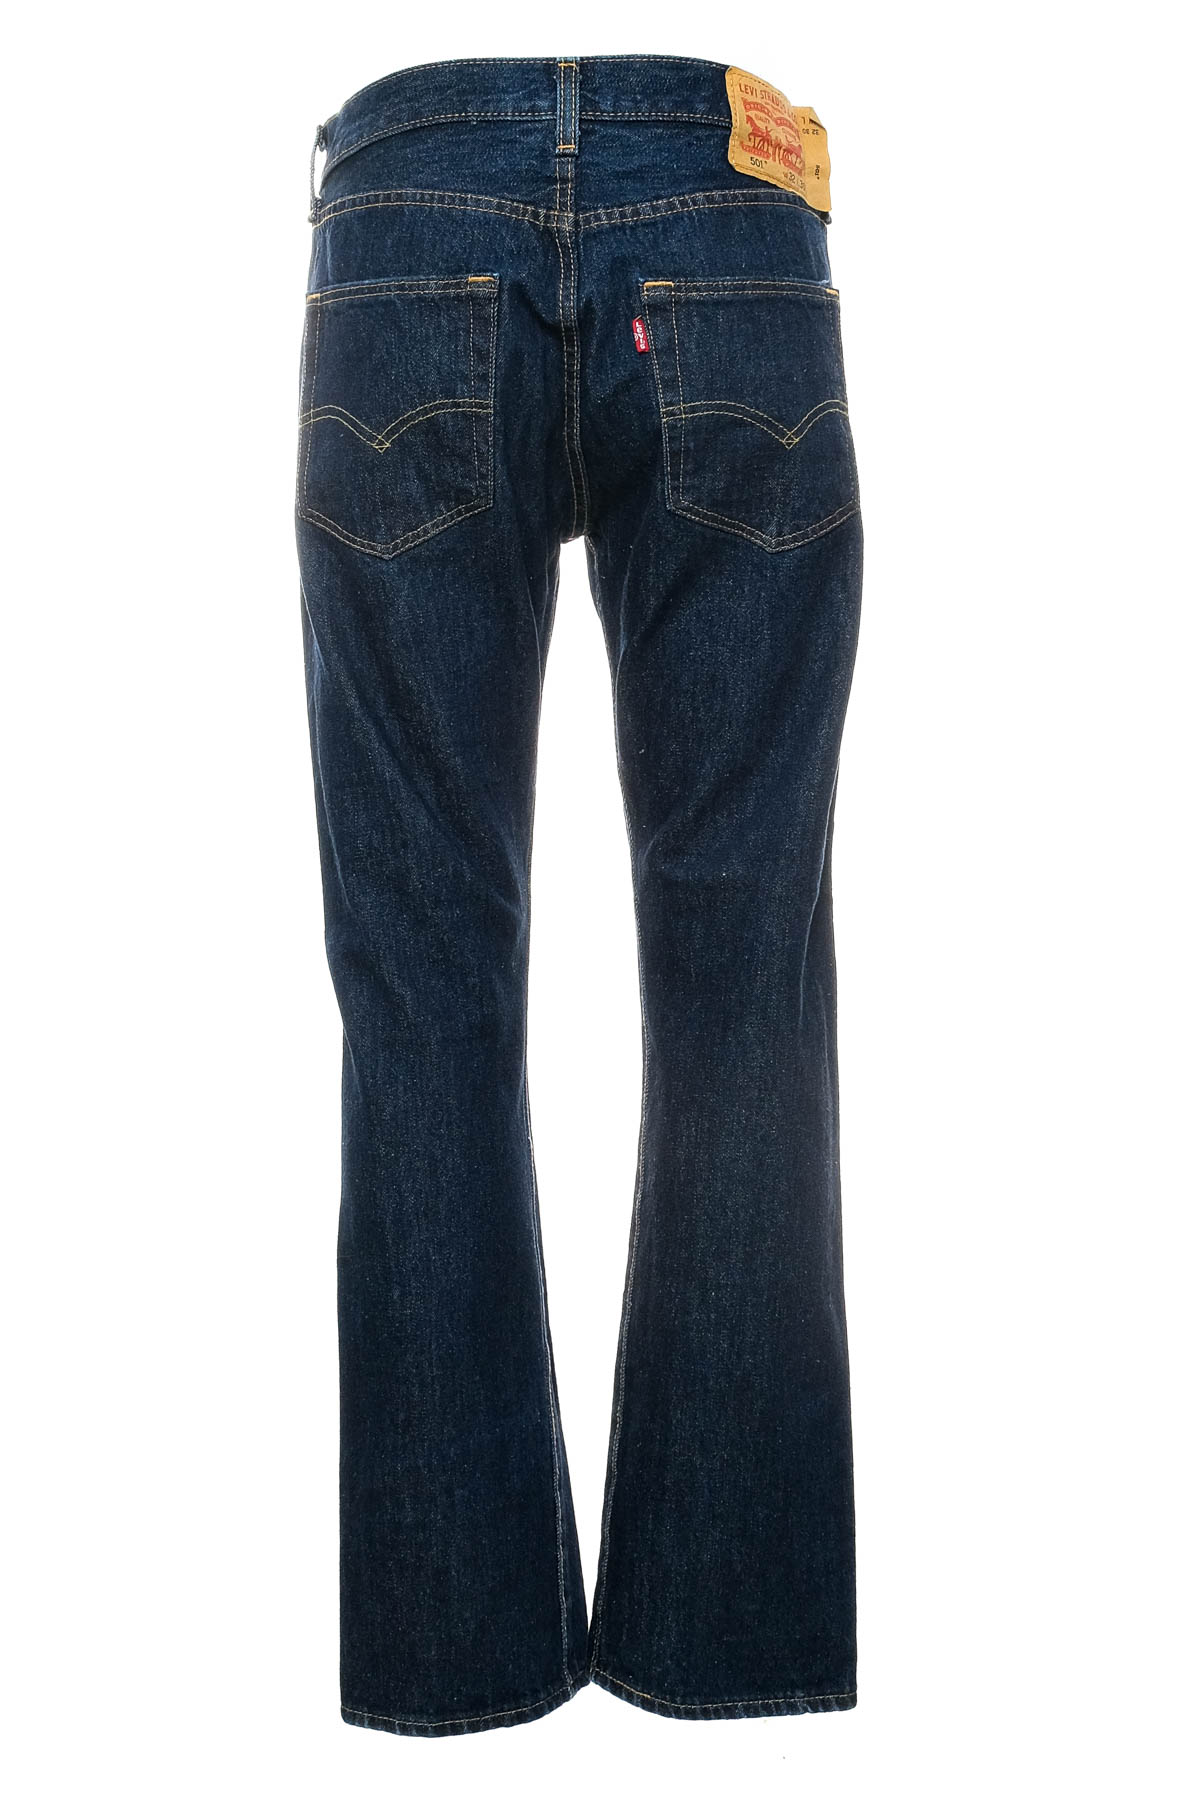 Men's jeans - Levi Strauss & Co - 1